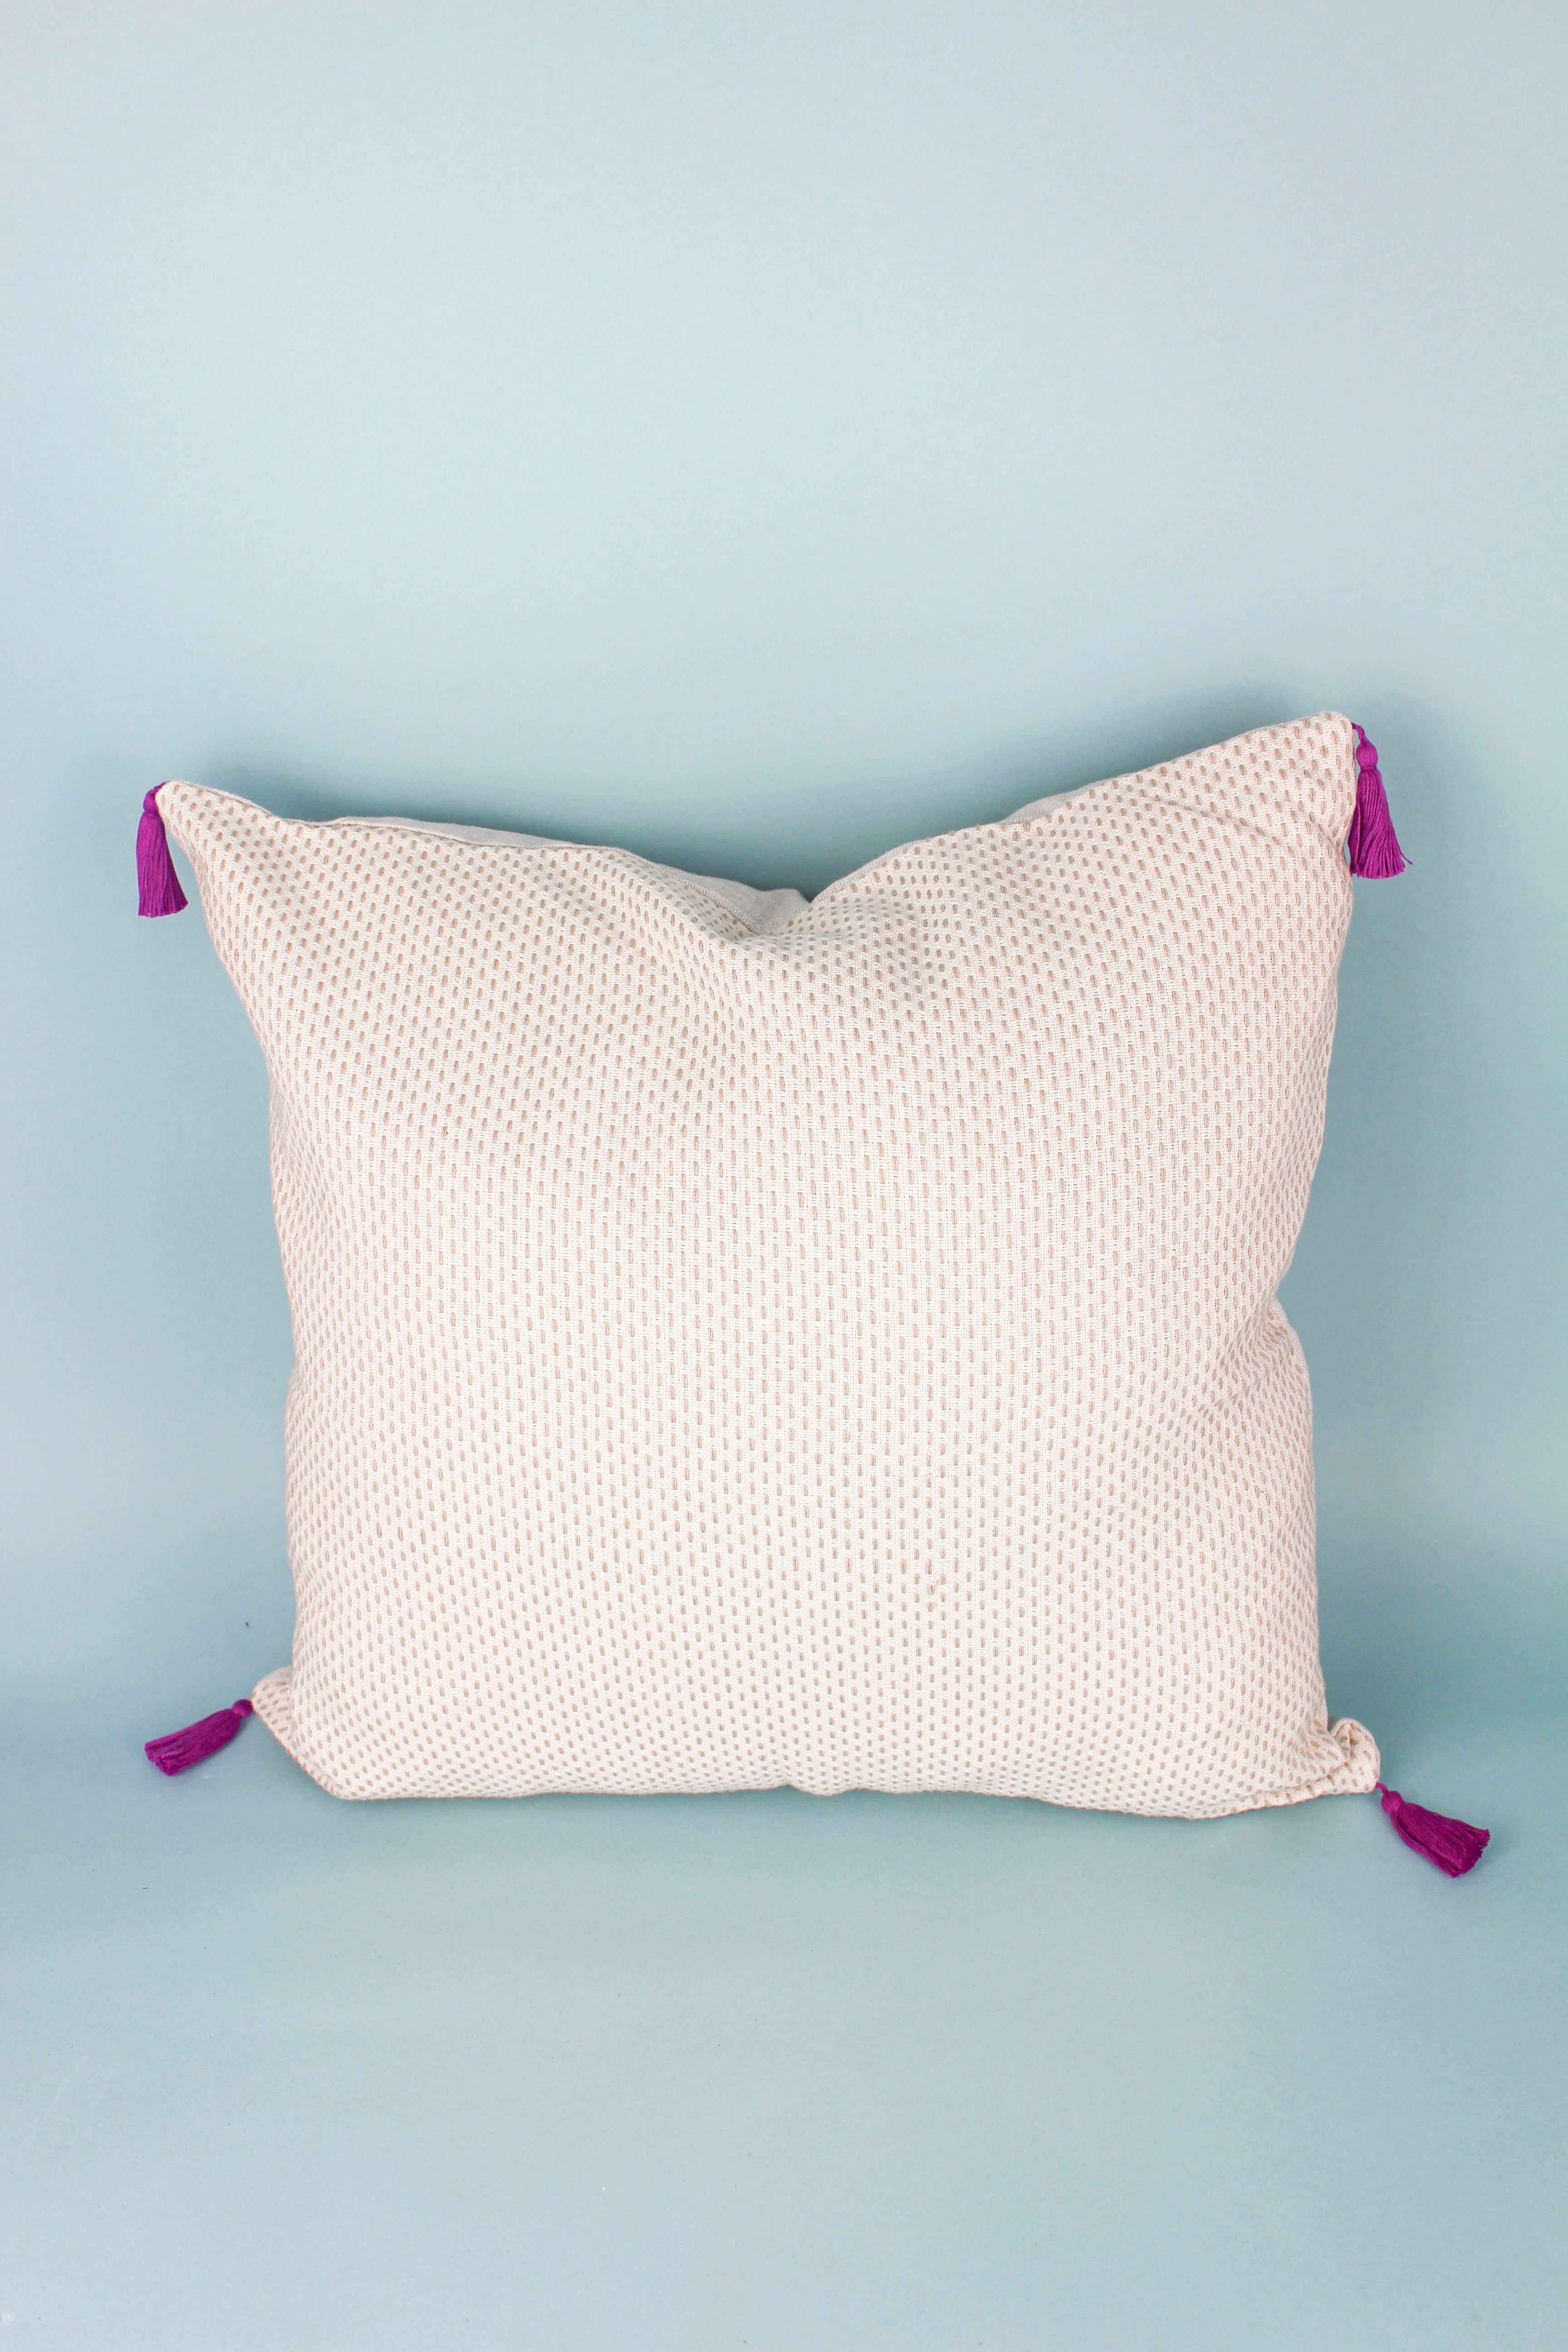 Dotted Stripe Print Pillowcases Medium Size - Pillows - Pisu - Brand_Pisu - Home_Decor - KTFWHS - Textiles_Throw Pillows & Blankets - Y002